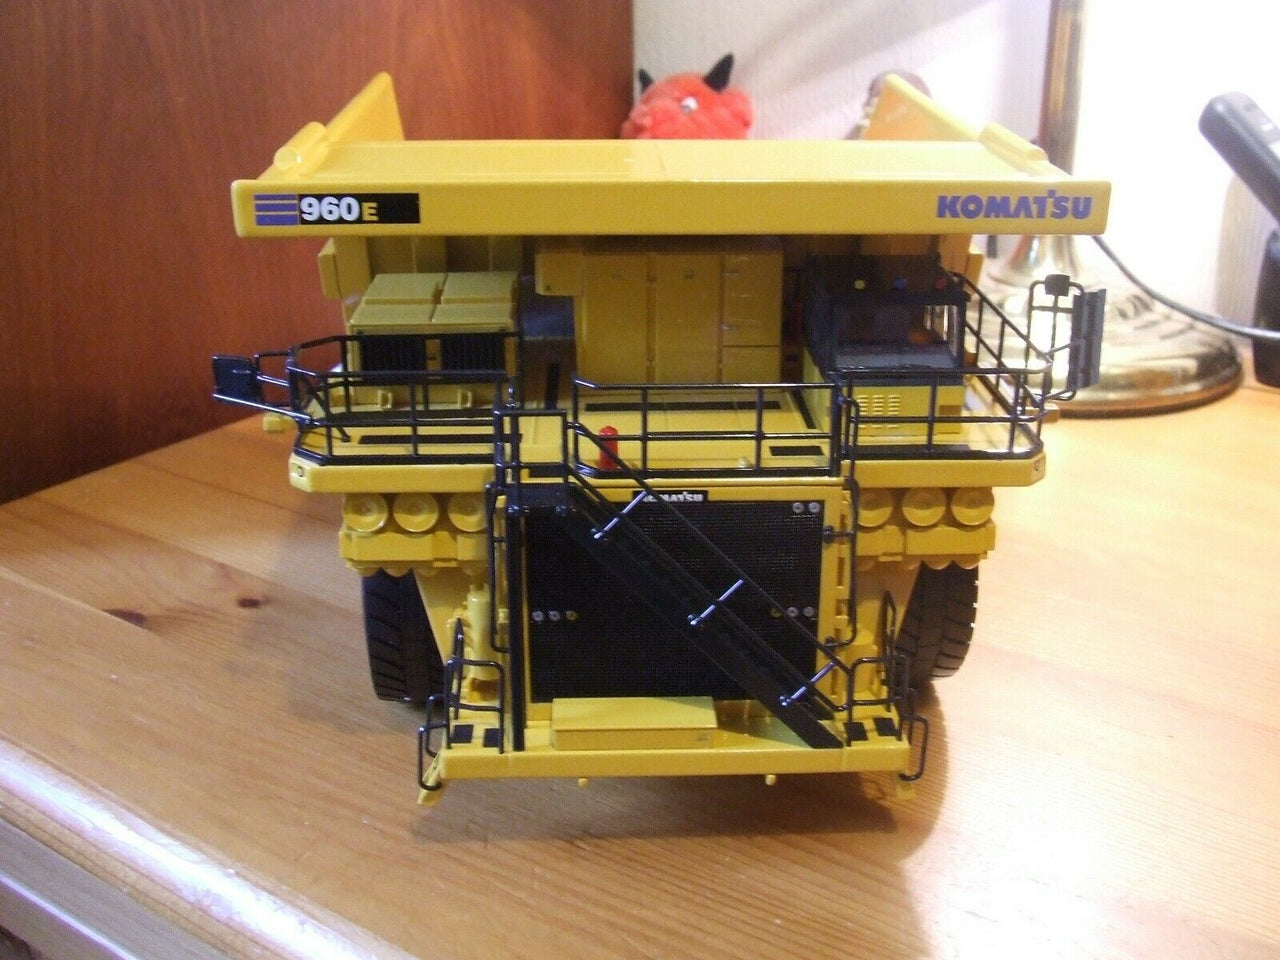 50-3138 Komatsu 960E Mining Truck 1:50 Scale (Discontinued Model)